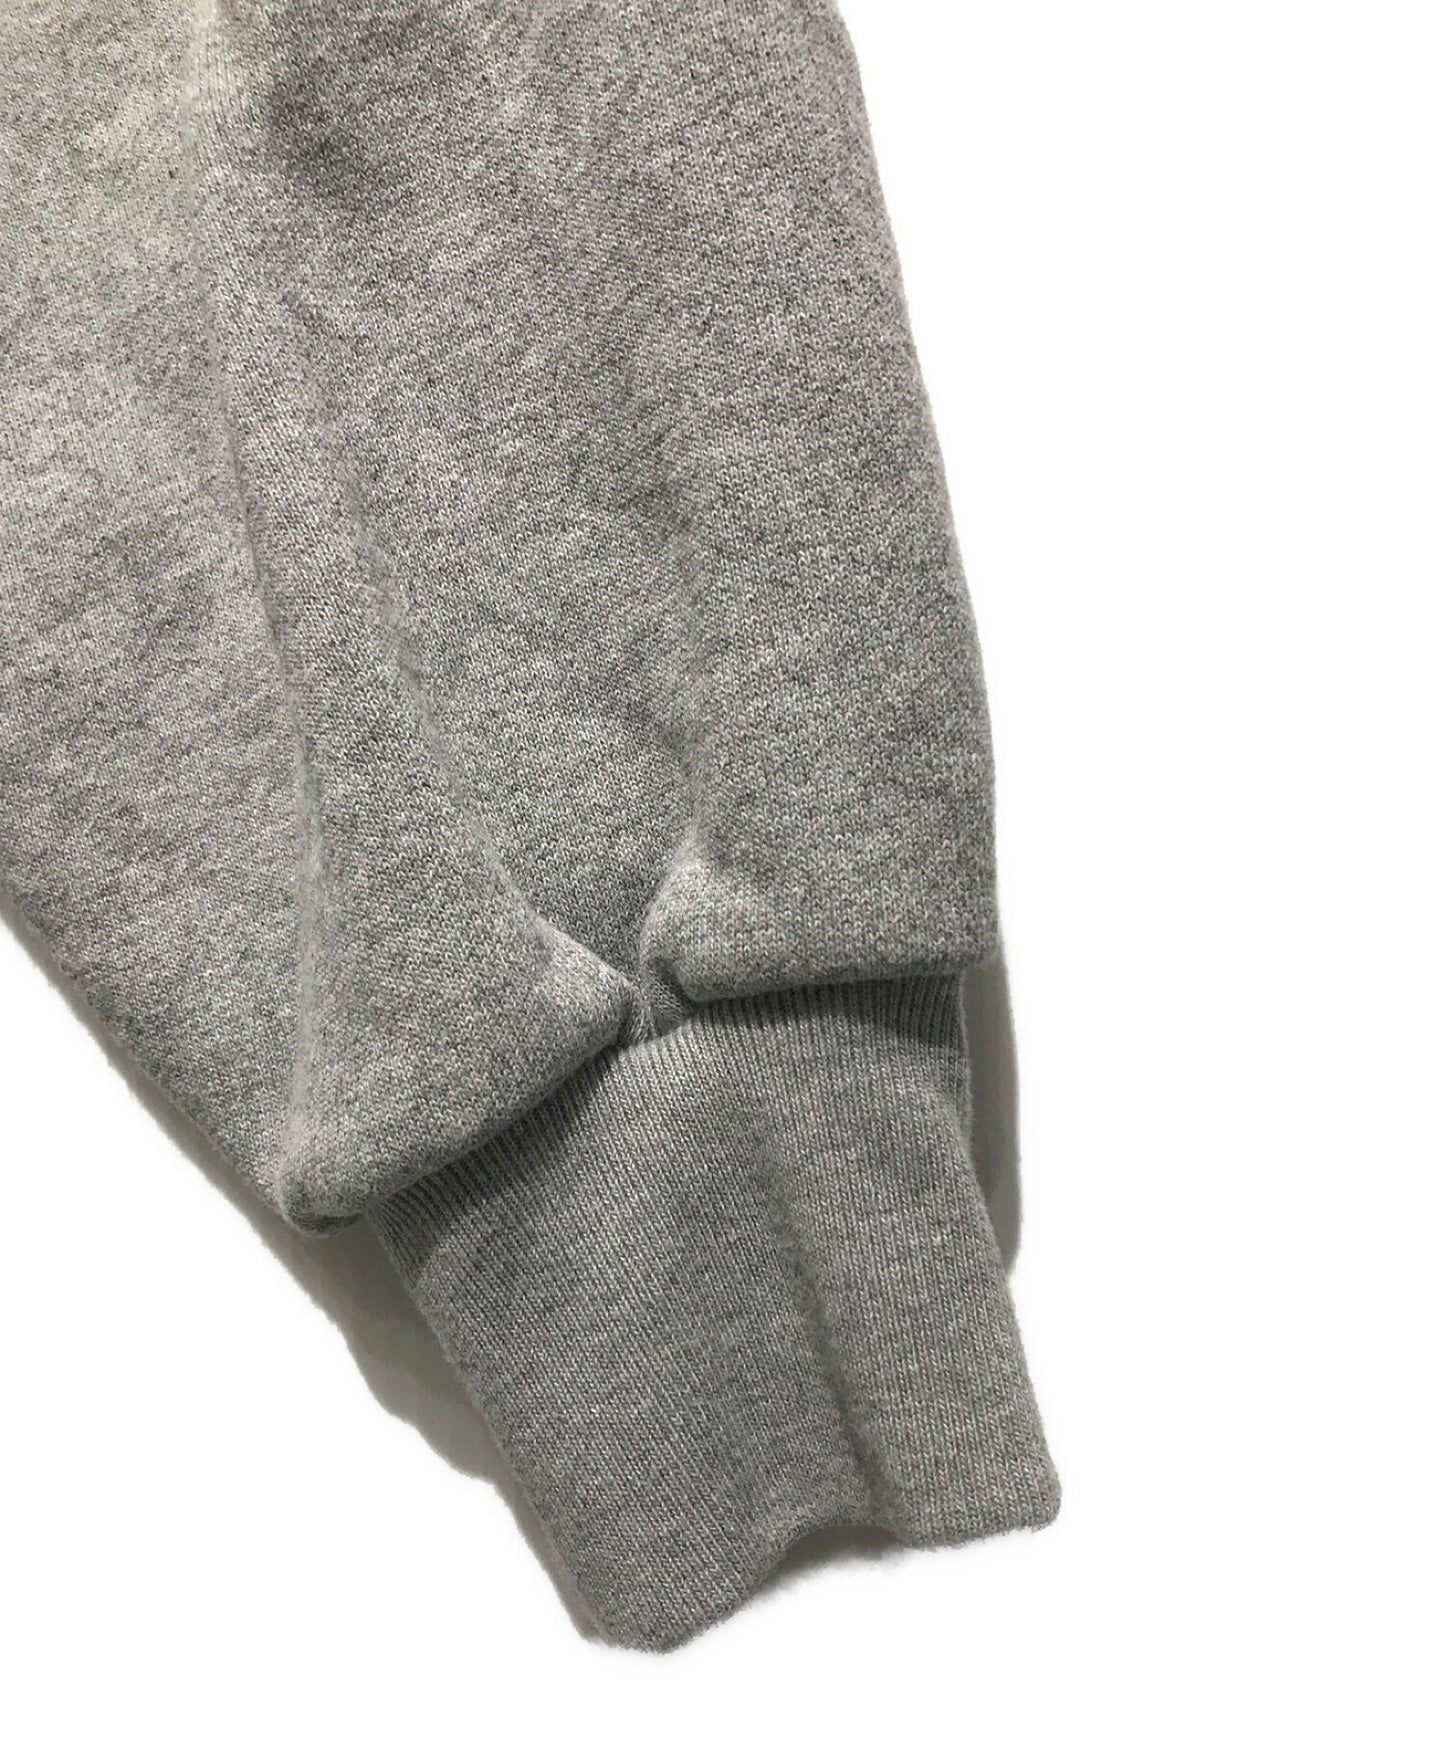 [Pre-owned] WTAPS Back Print Sweatshirt